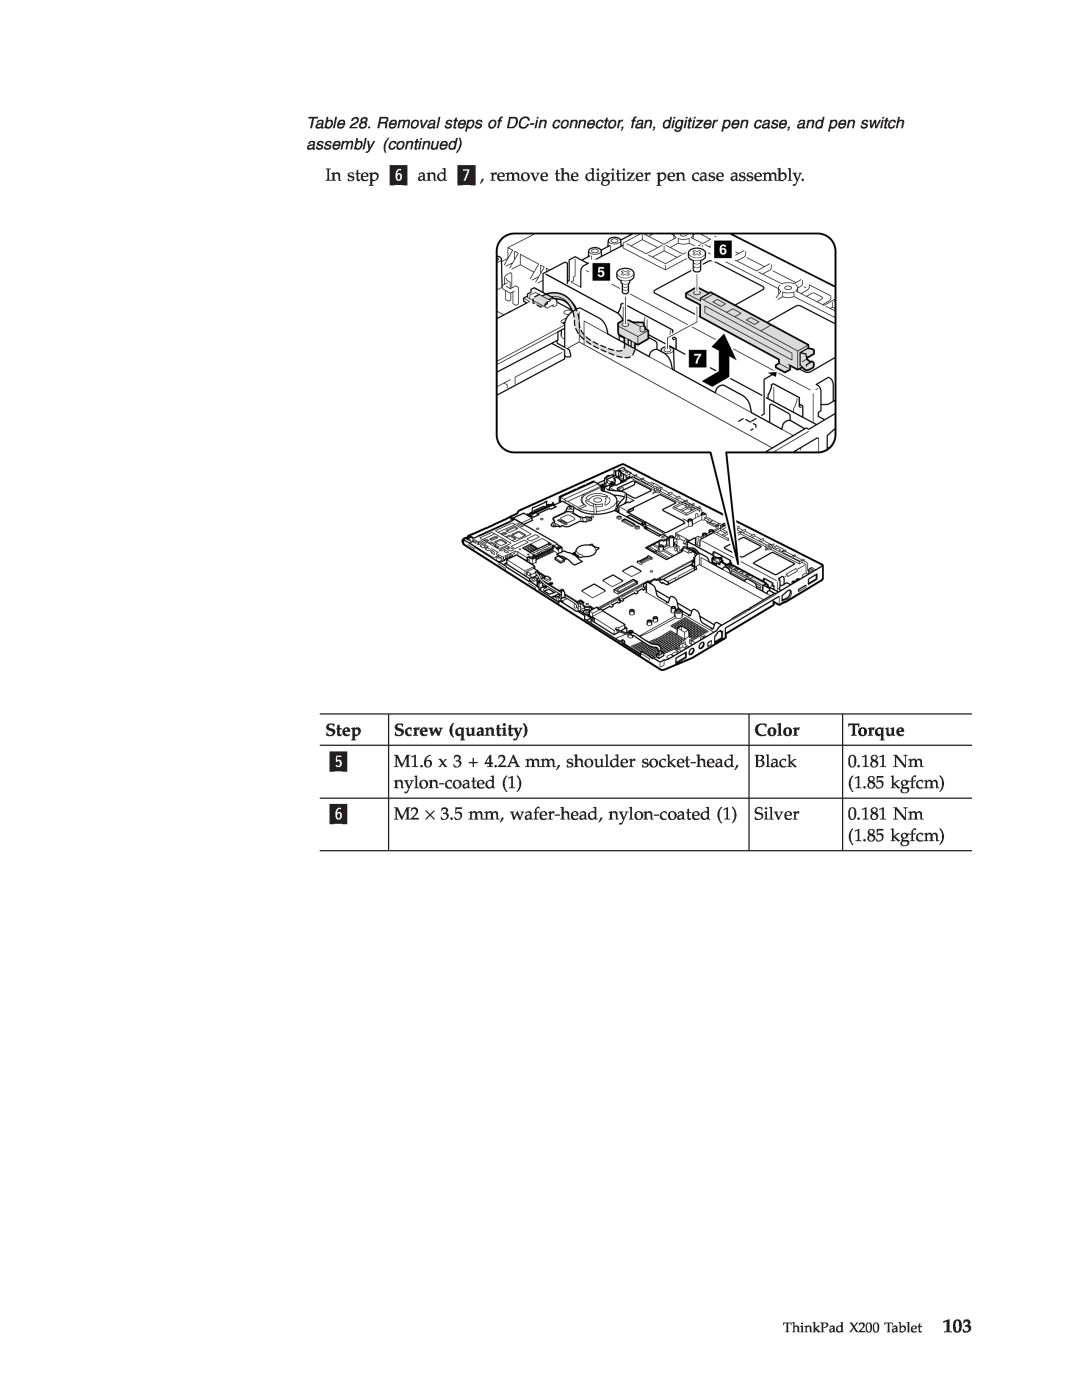 Lenovo X200 manual In step, Step, Screw quantity, Color, Torque 